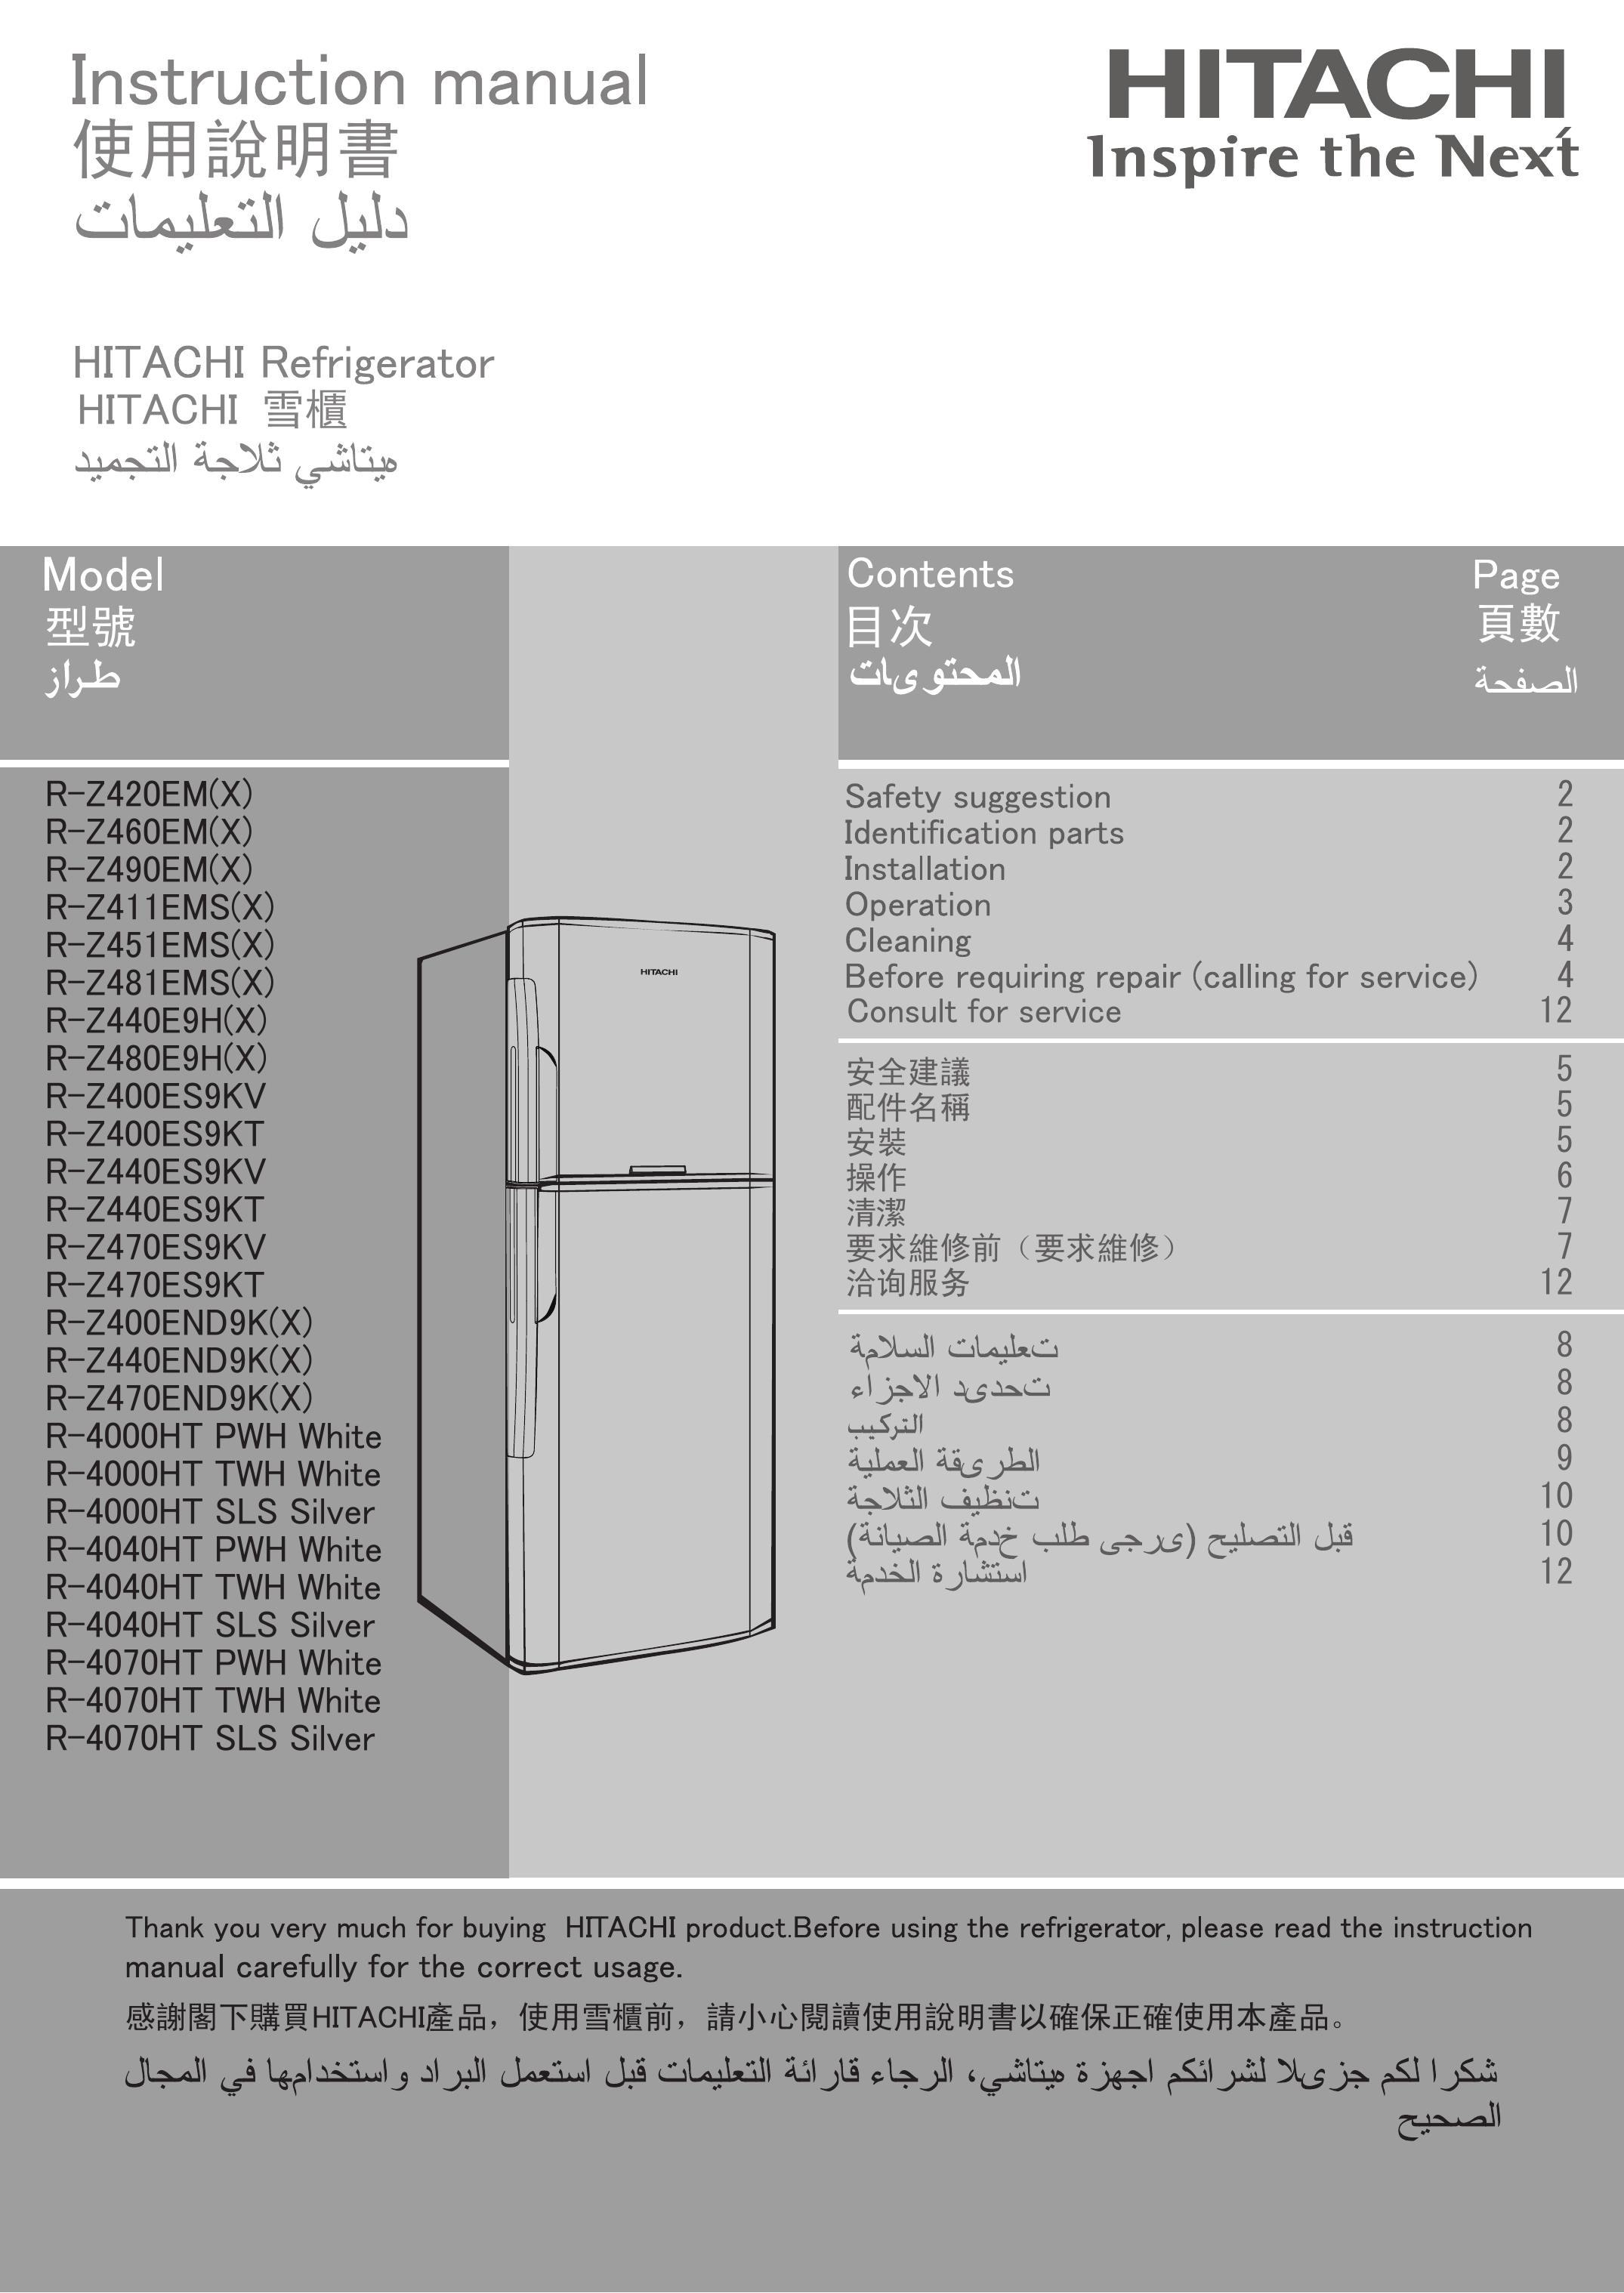 Hitachi R-Z400END9K(X) Refrigerator User Manual